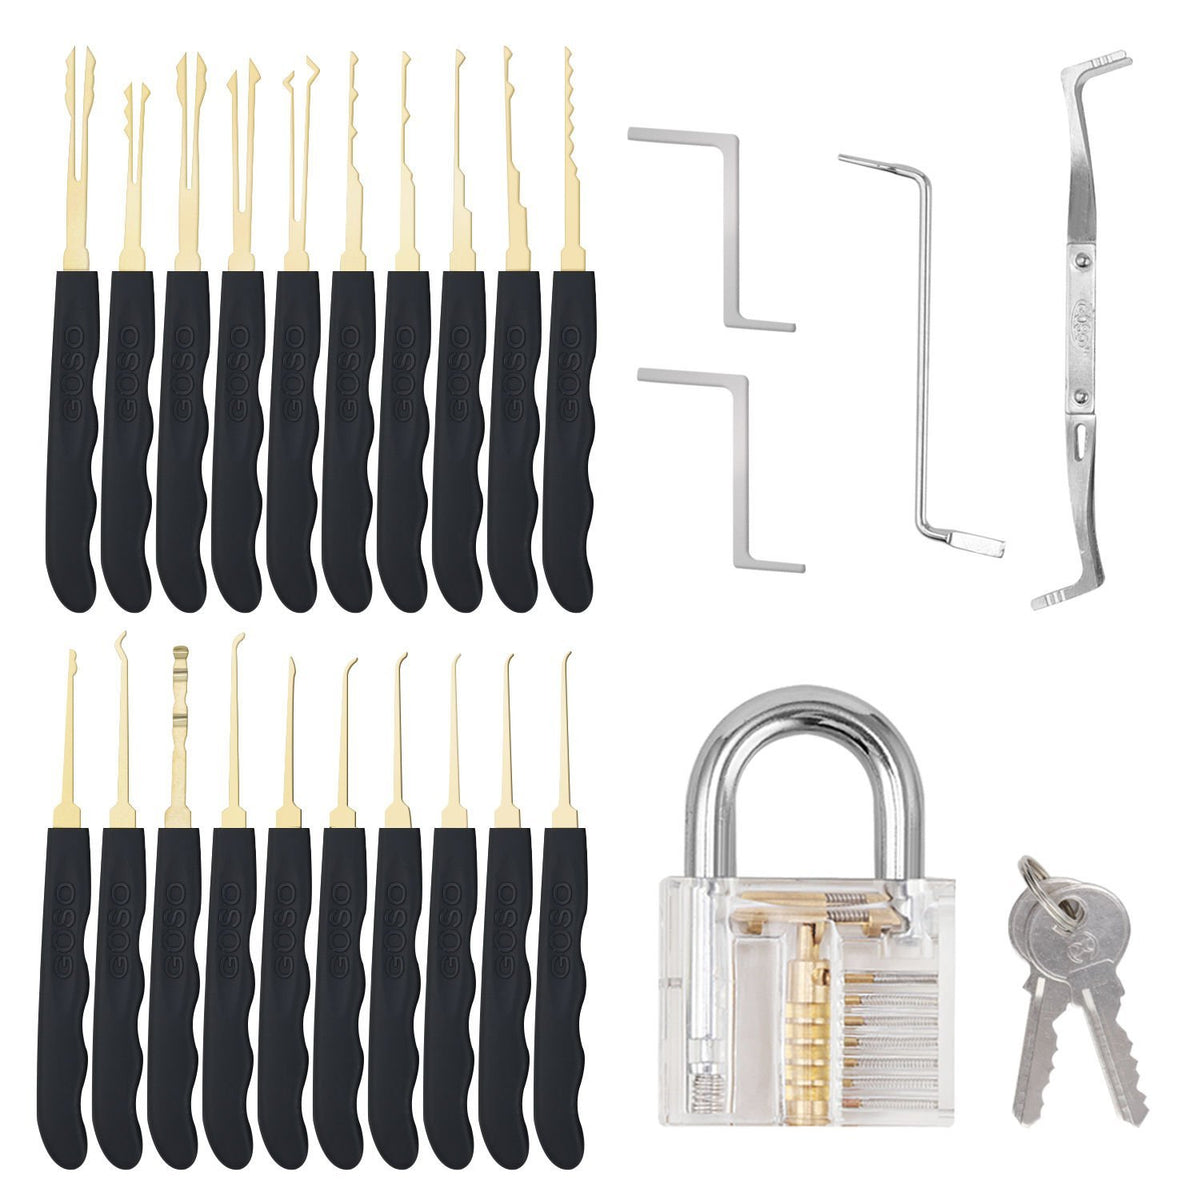 GOSO Lock Pick Set: Lock Picks, tension tools, wallet, eBook